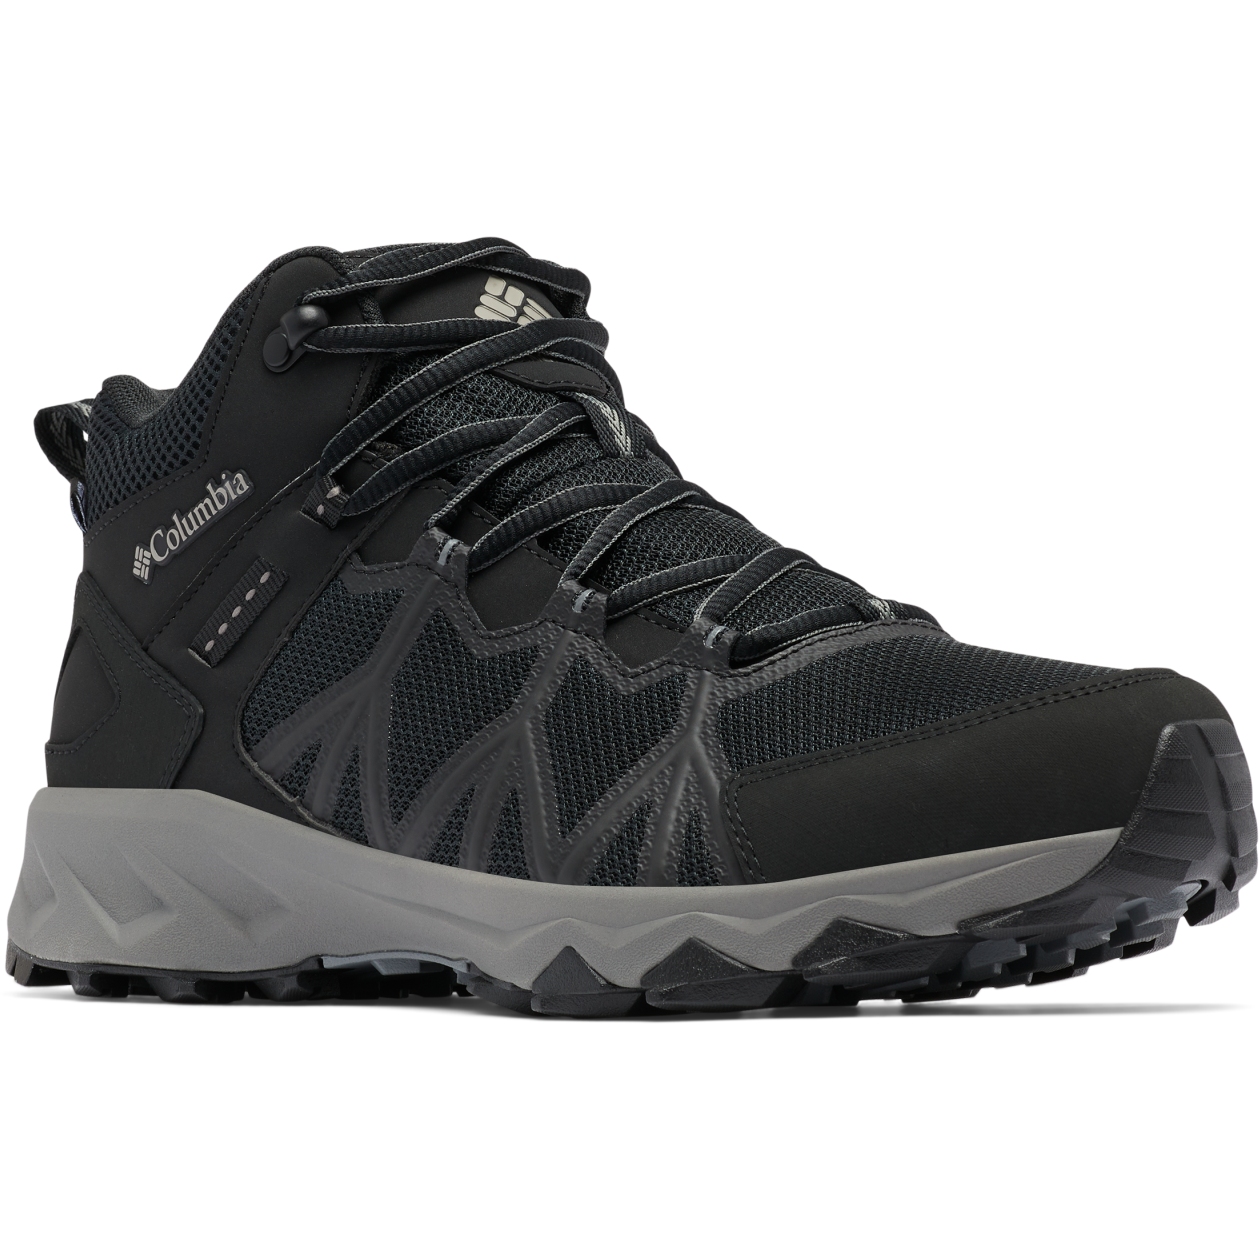 Picture of Columbia Peakfreak II Mid Outdry Hiking Shoes - Black/Titanium II